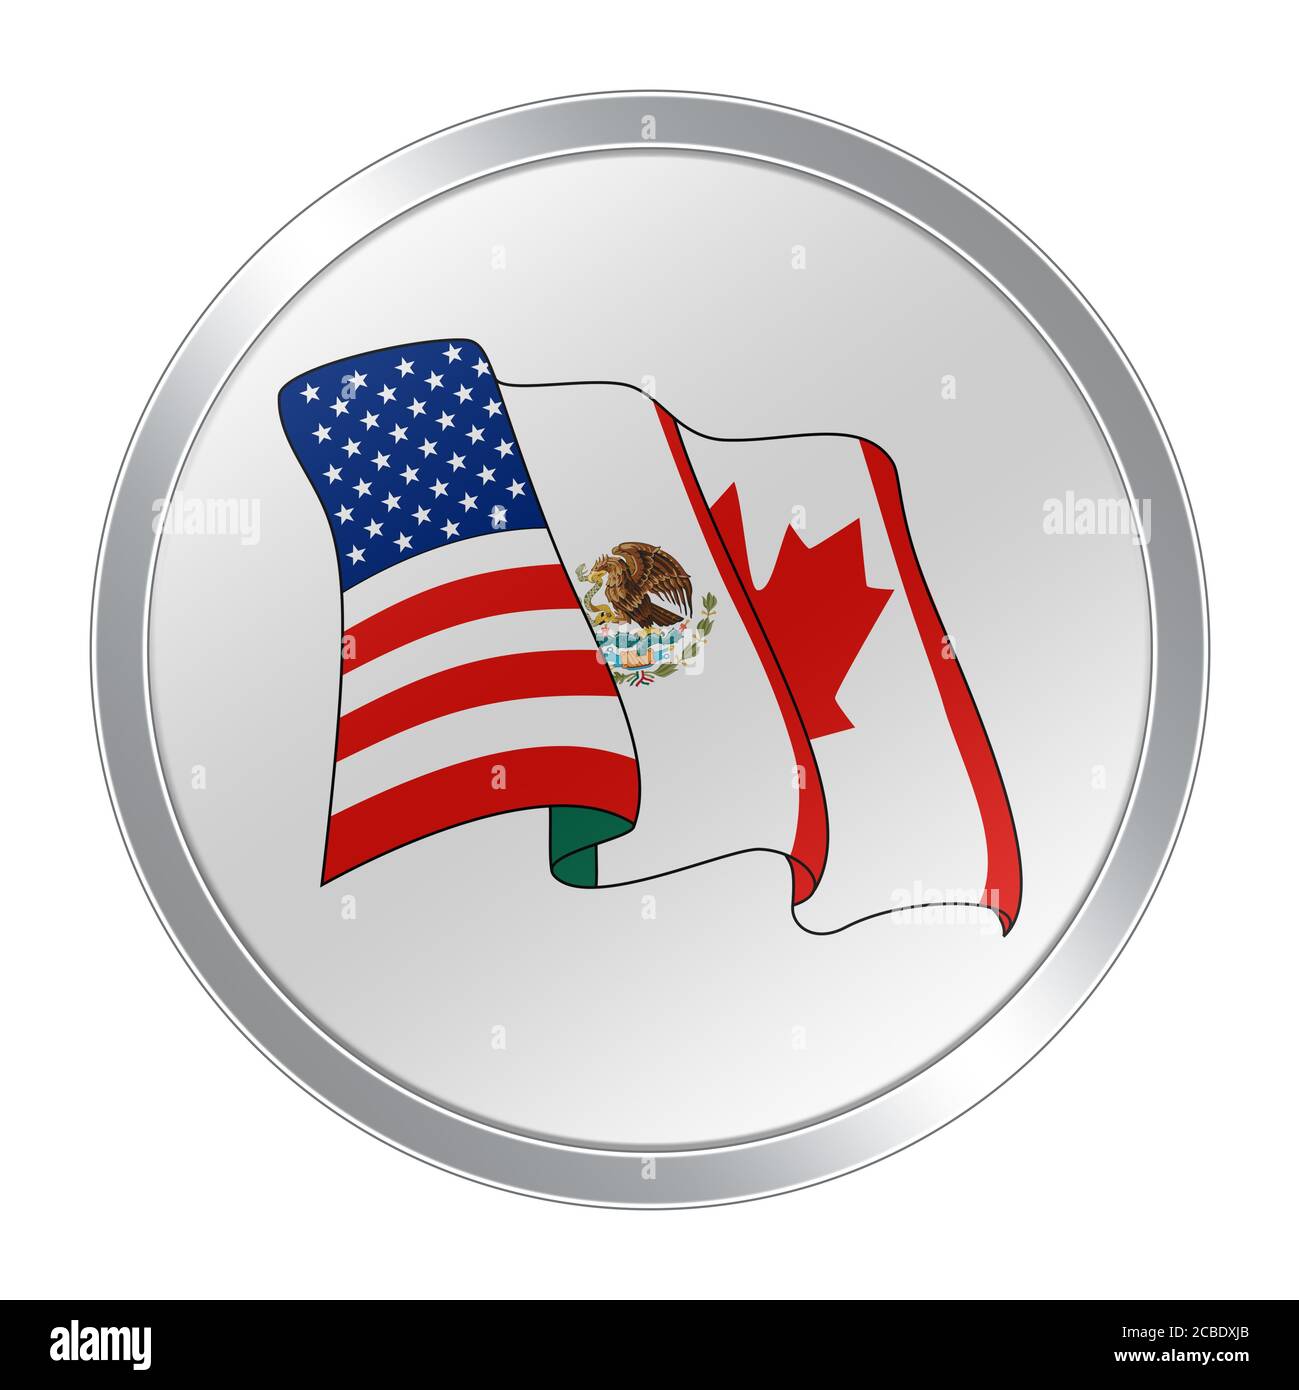 North American Free Trade Agreement NAFTA logo symbol Stock Photo